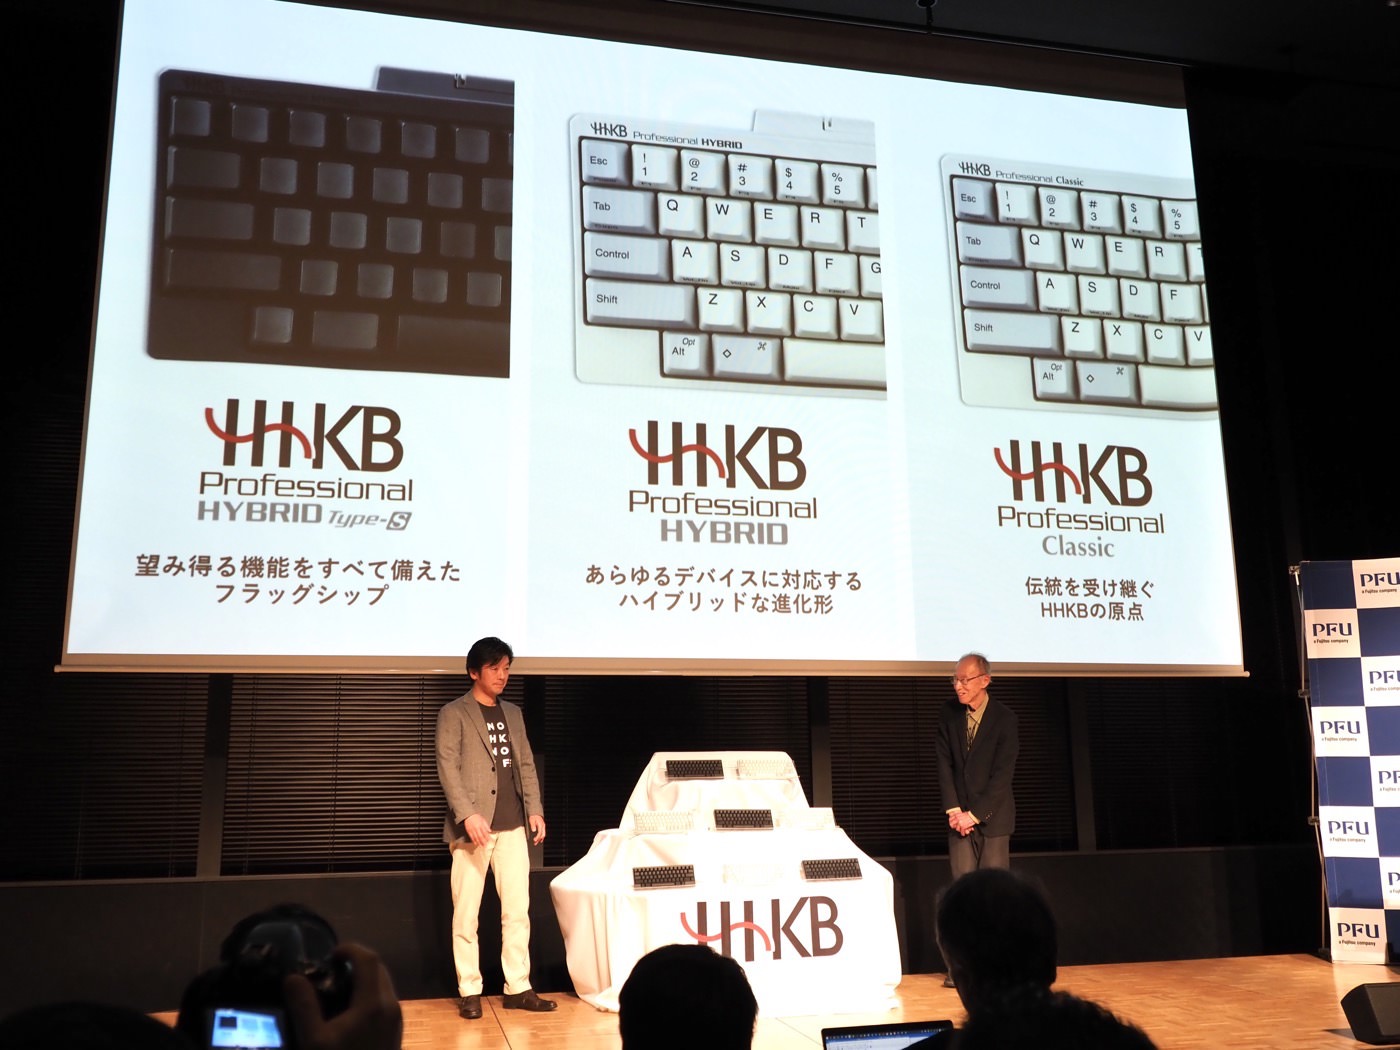 Happy hacking keyboard hybrid type s 00006